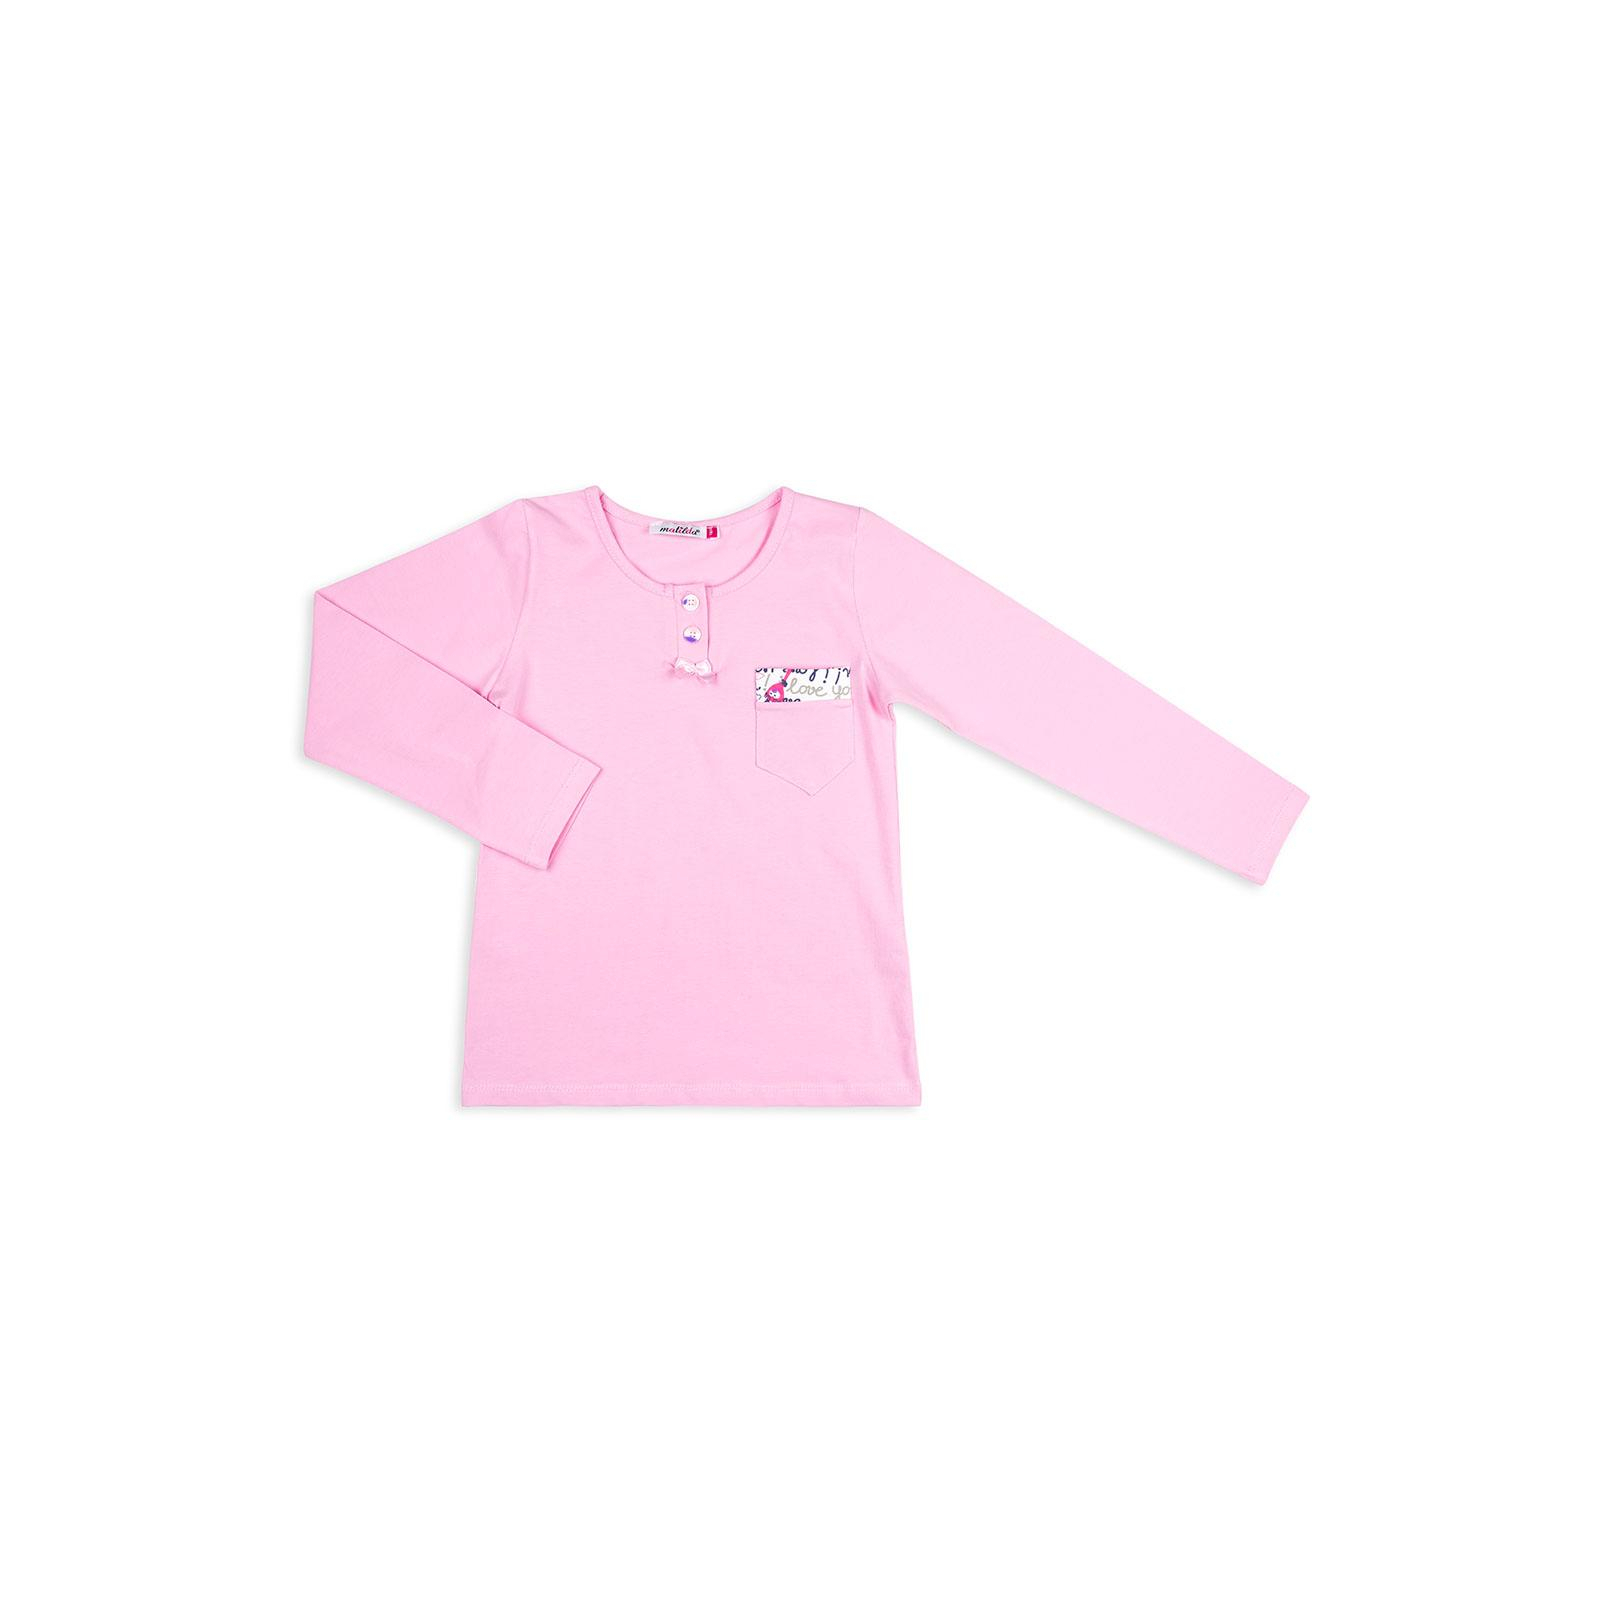 Пижама Matilda с котиками (4158-152G-pink) изображение 2